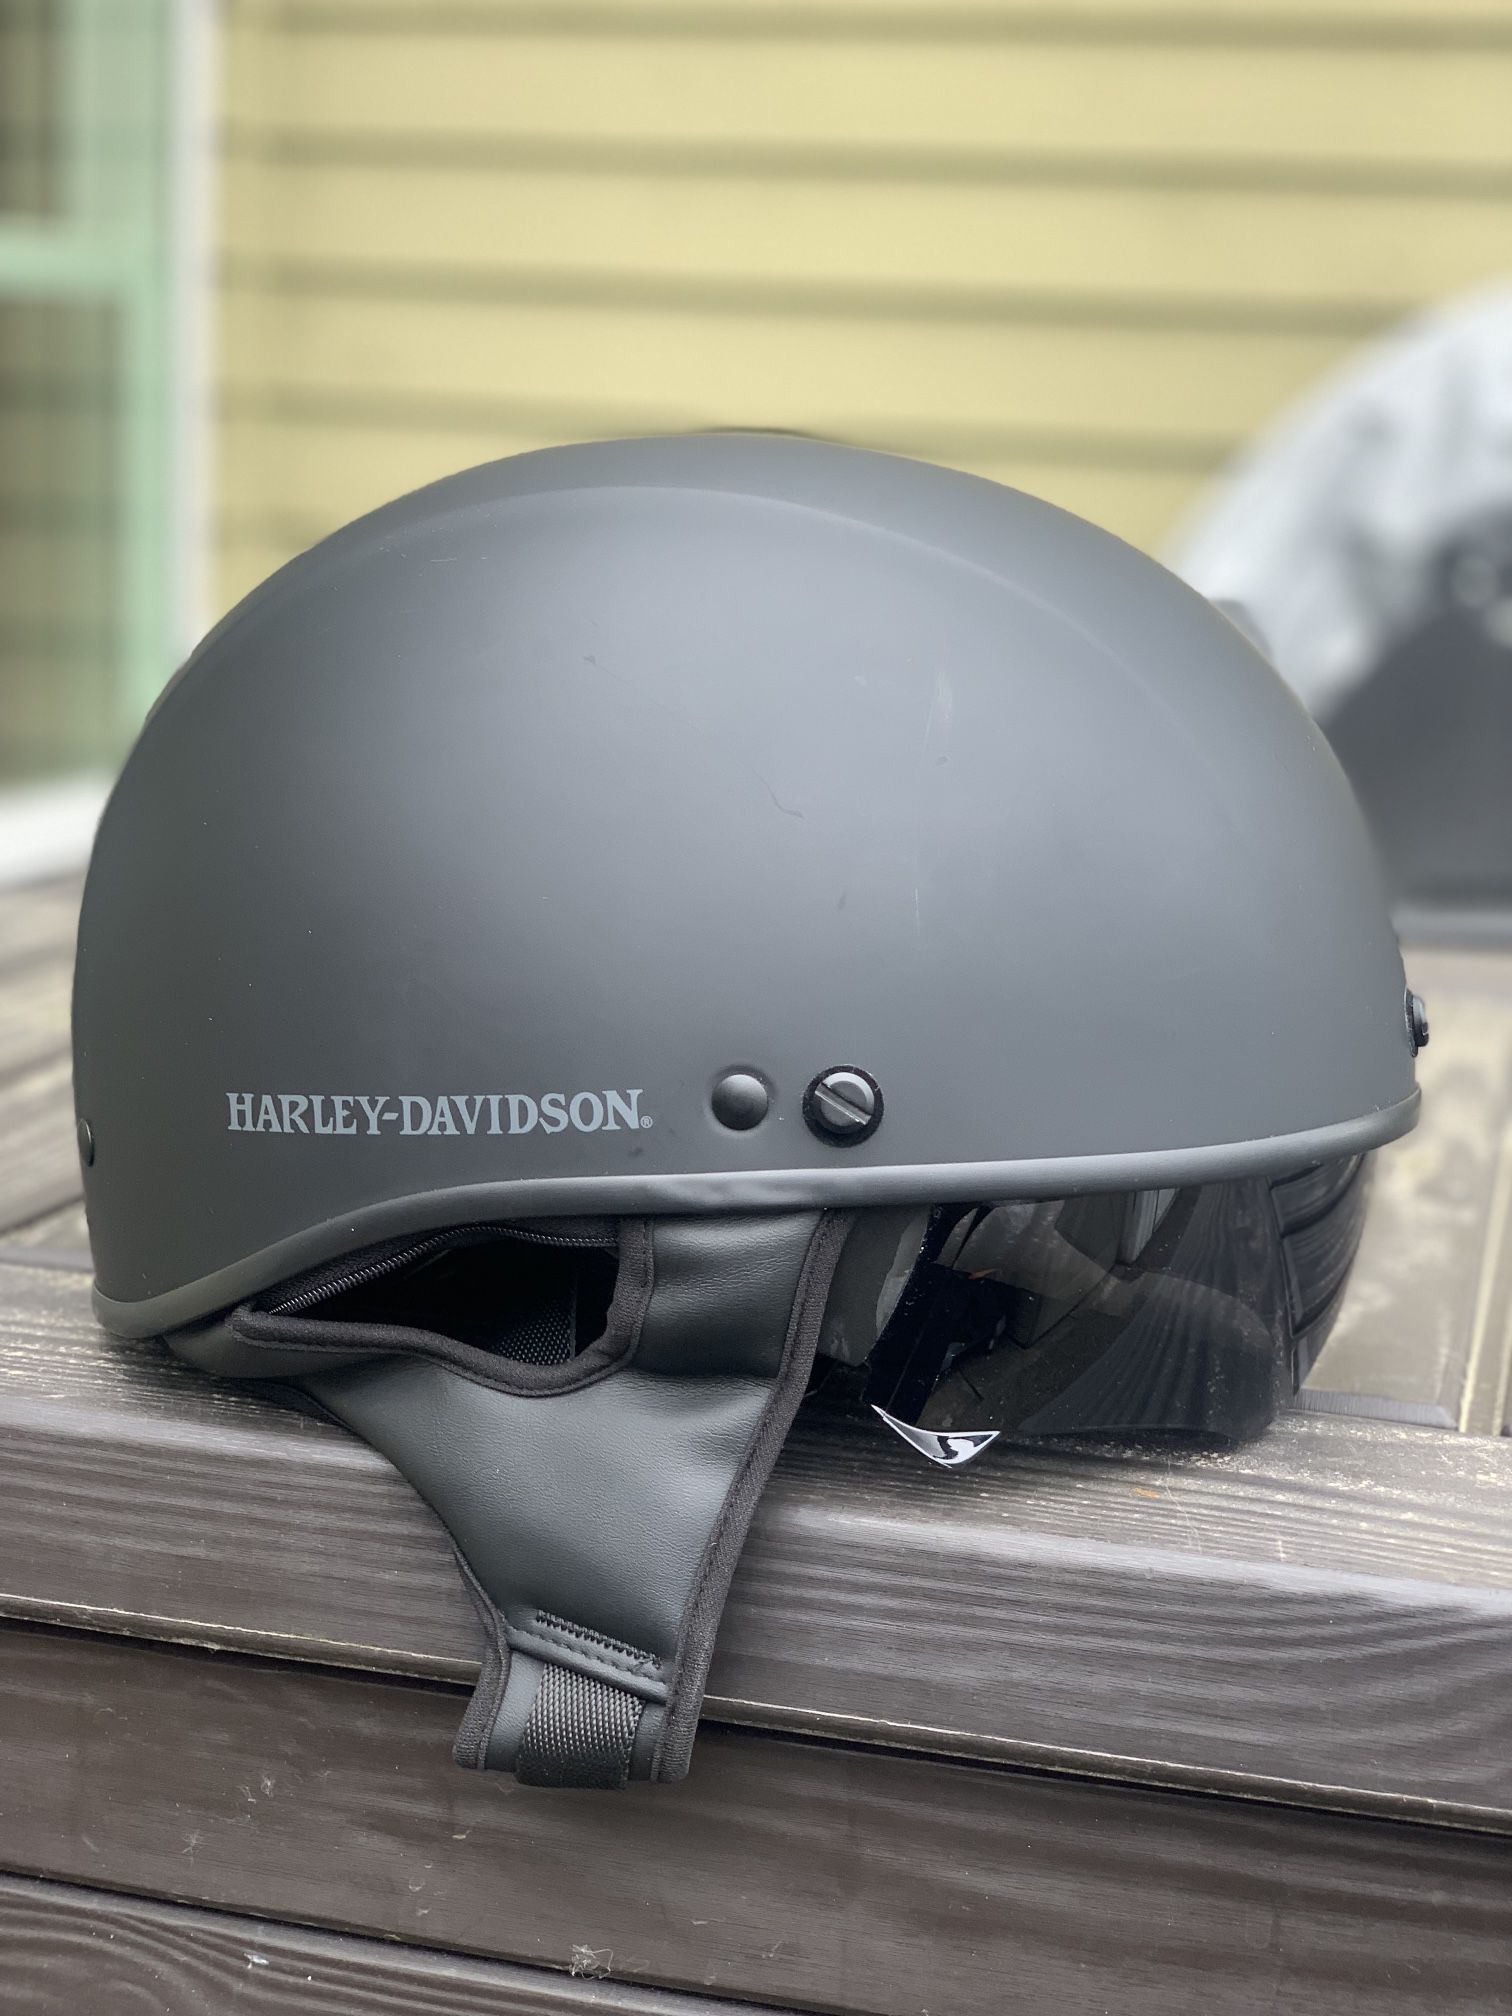 Harley Davidson Helmet SMALL